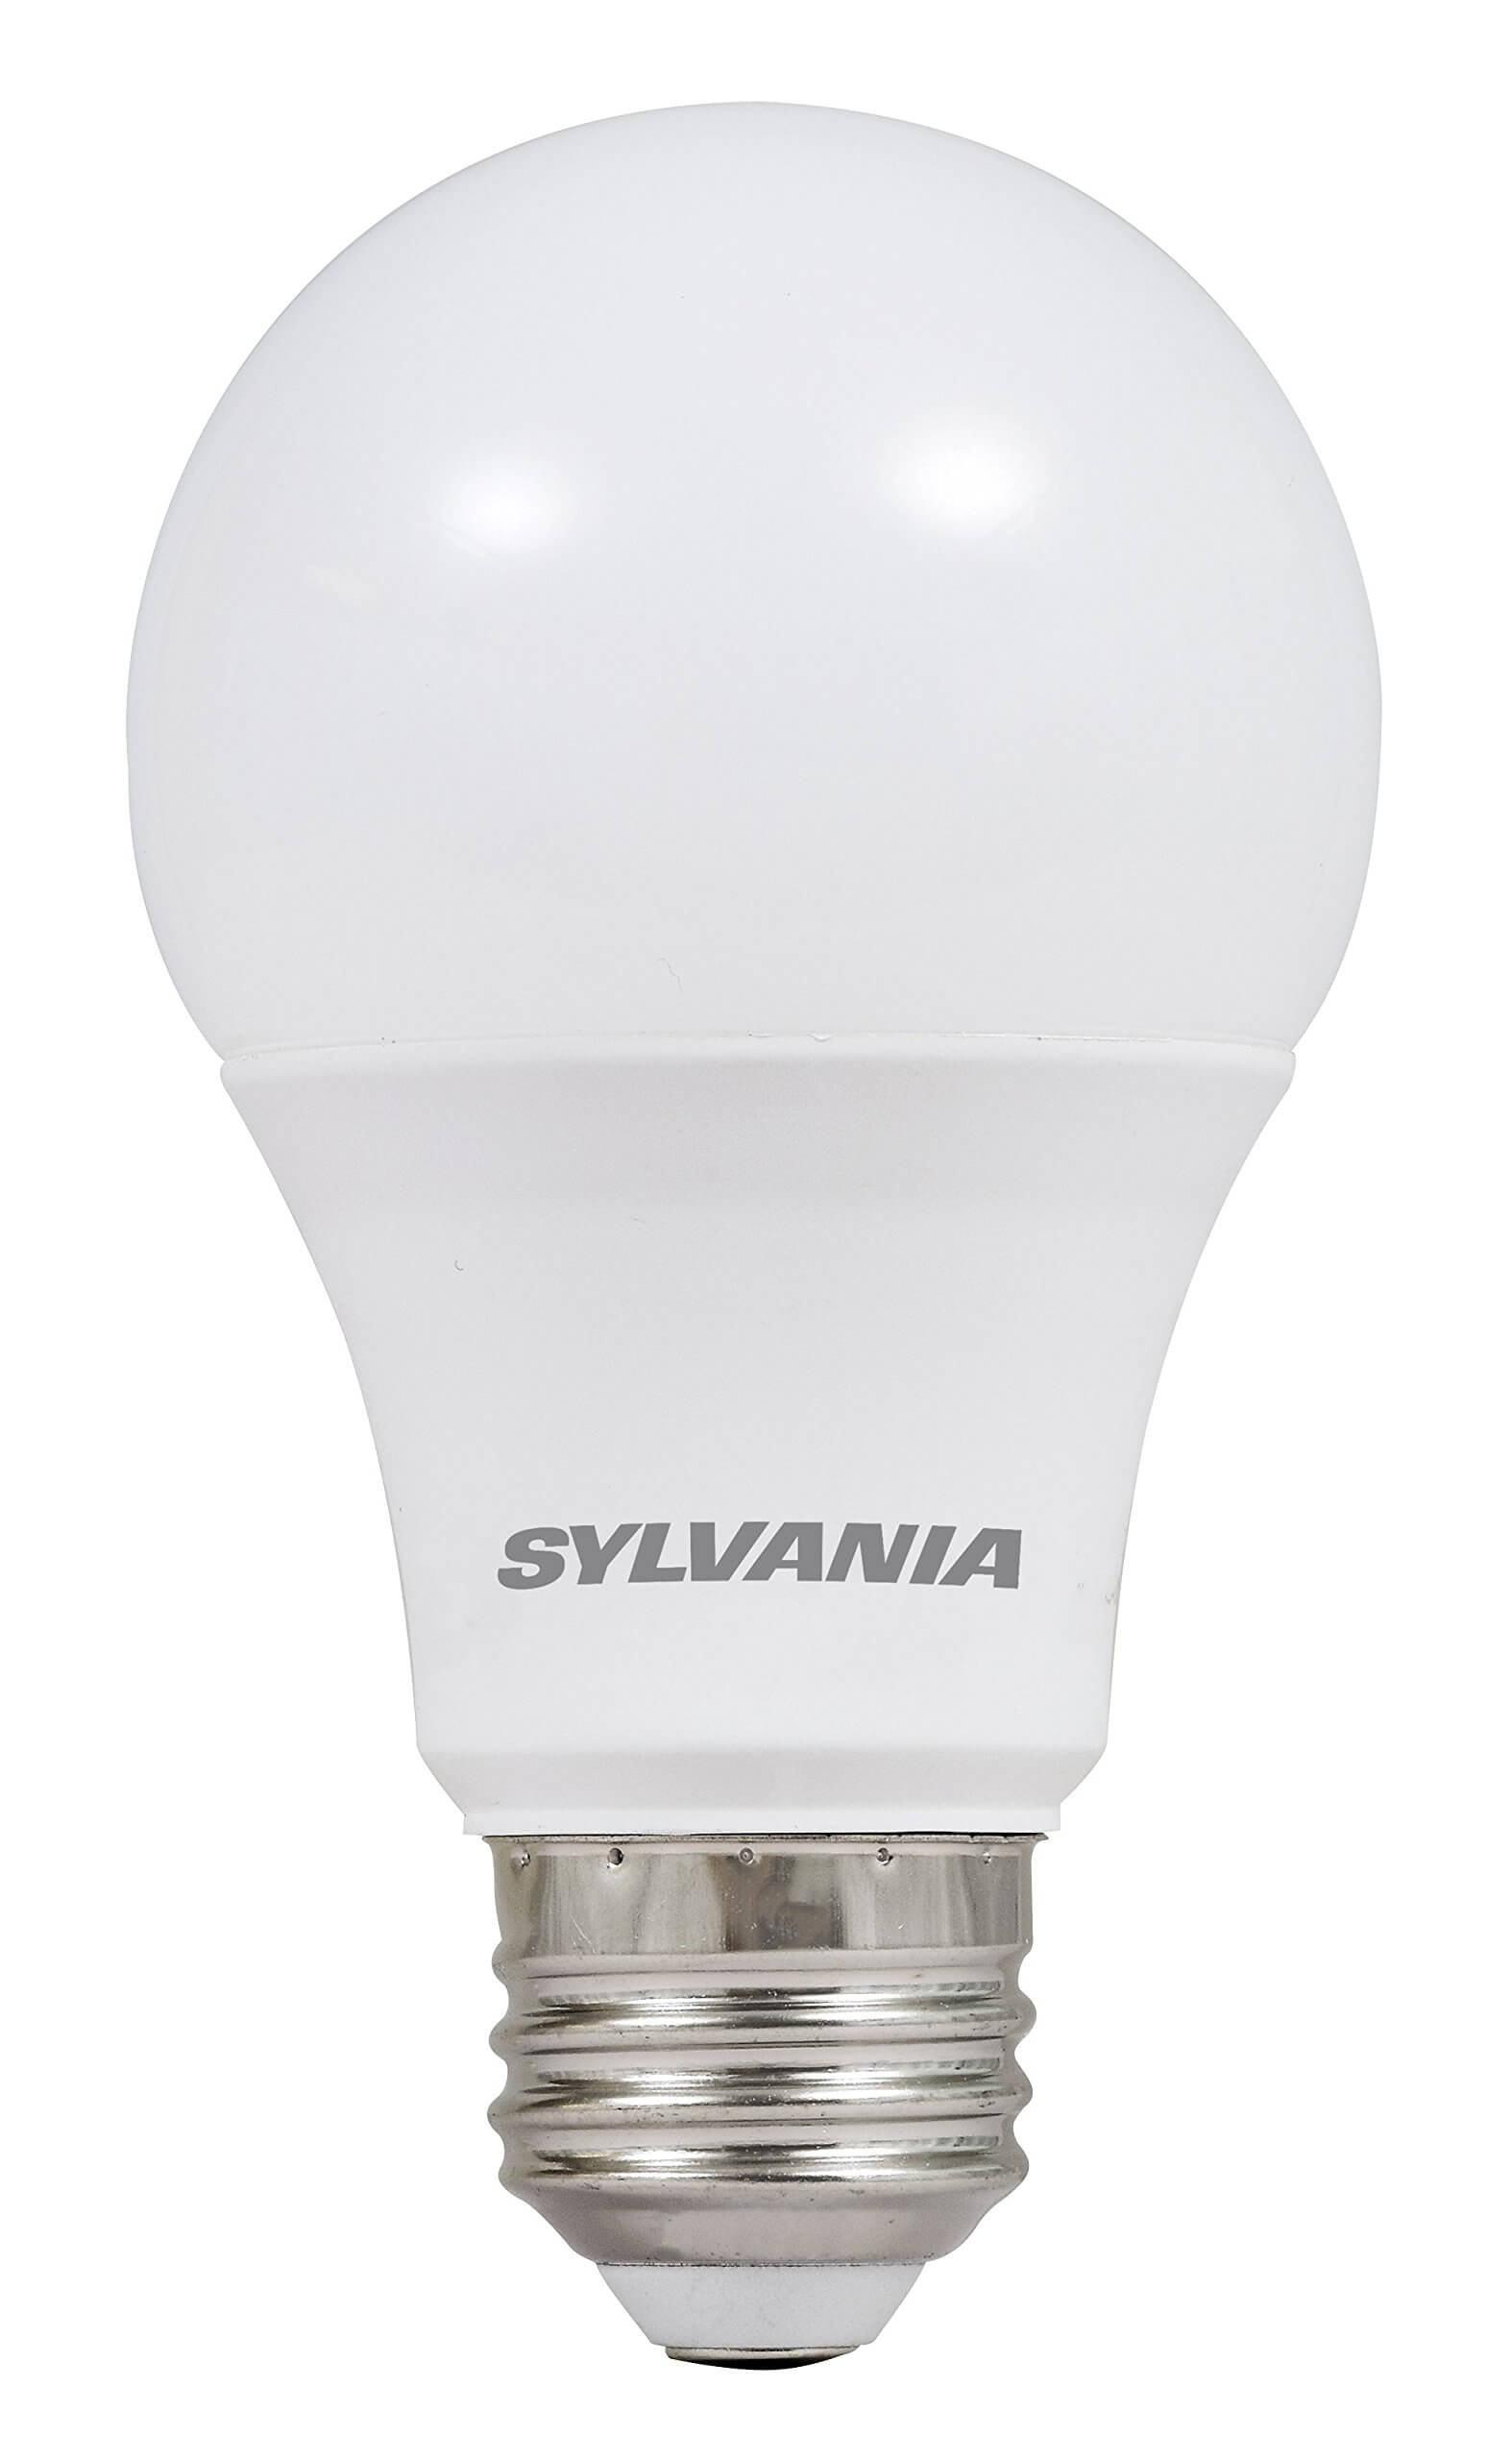 SYLVANIA LED light bulb.